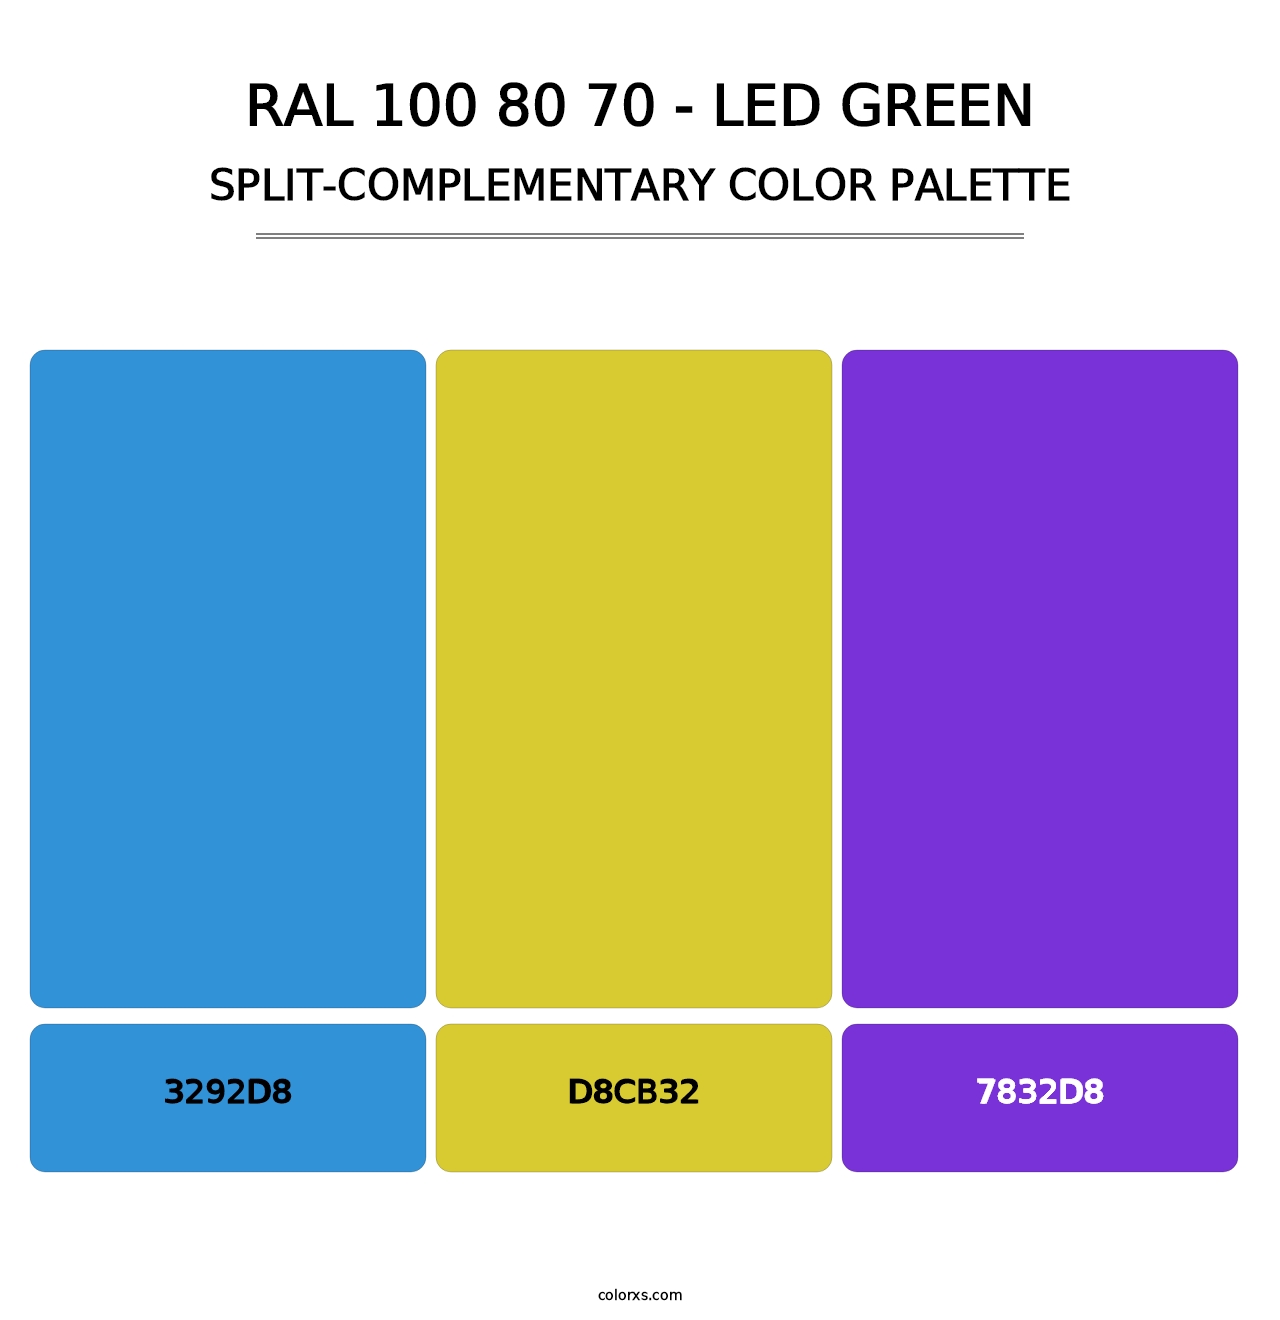 RAL 100 80 70 - LED Green - Split-Complementary Color Palette